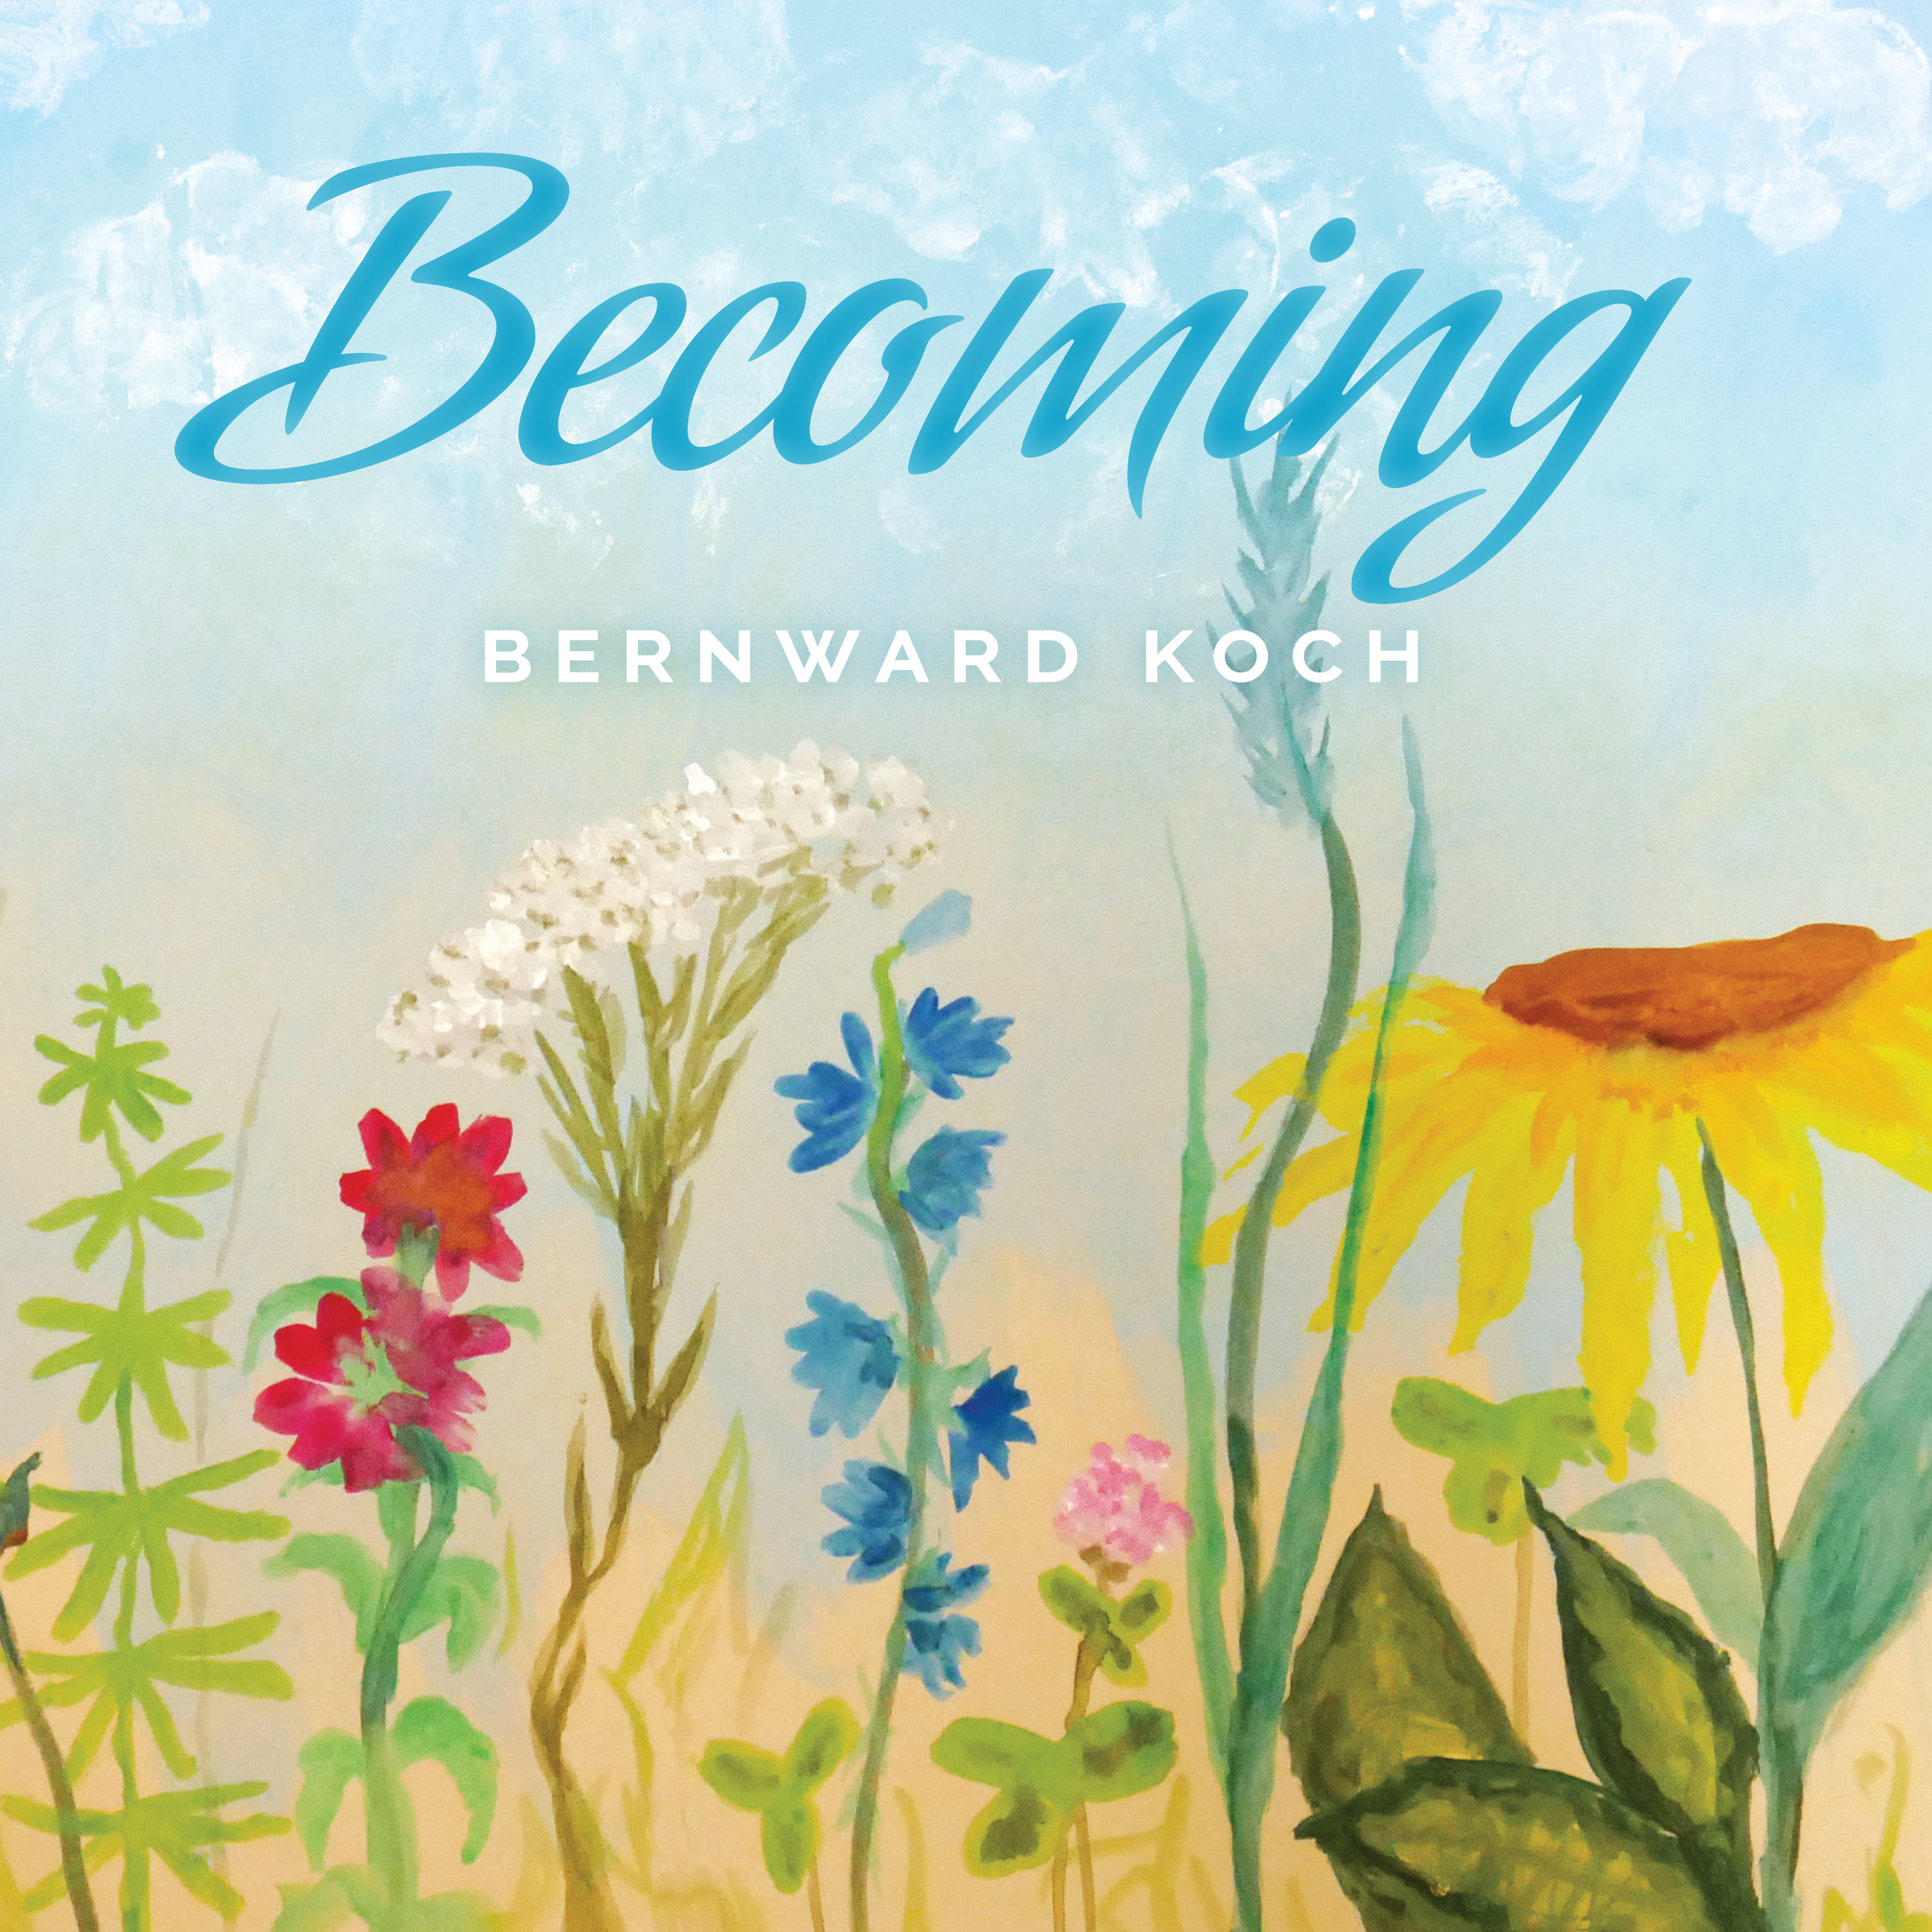 Art for Becoming by Bernward Koch